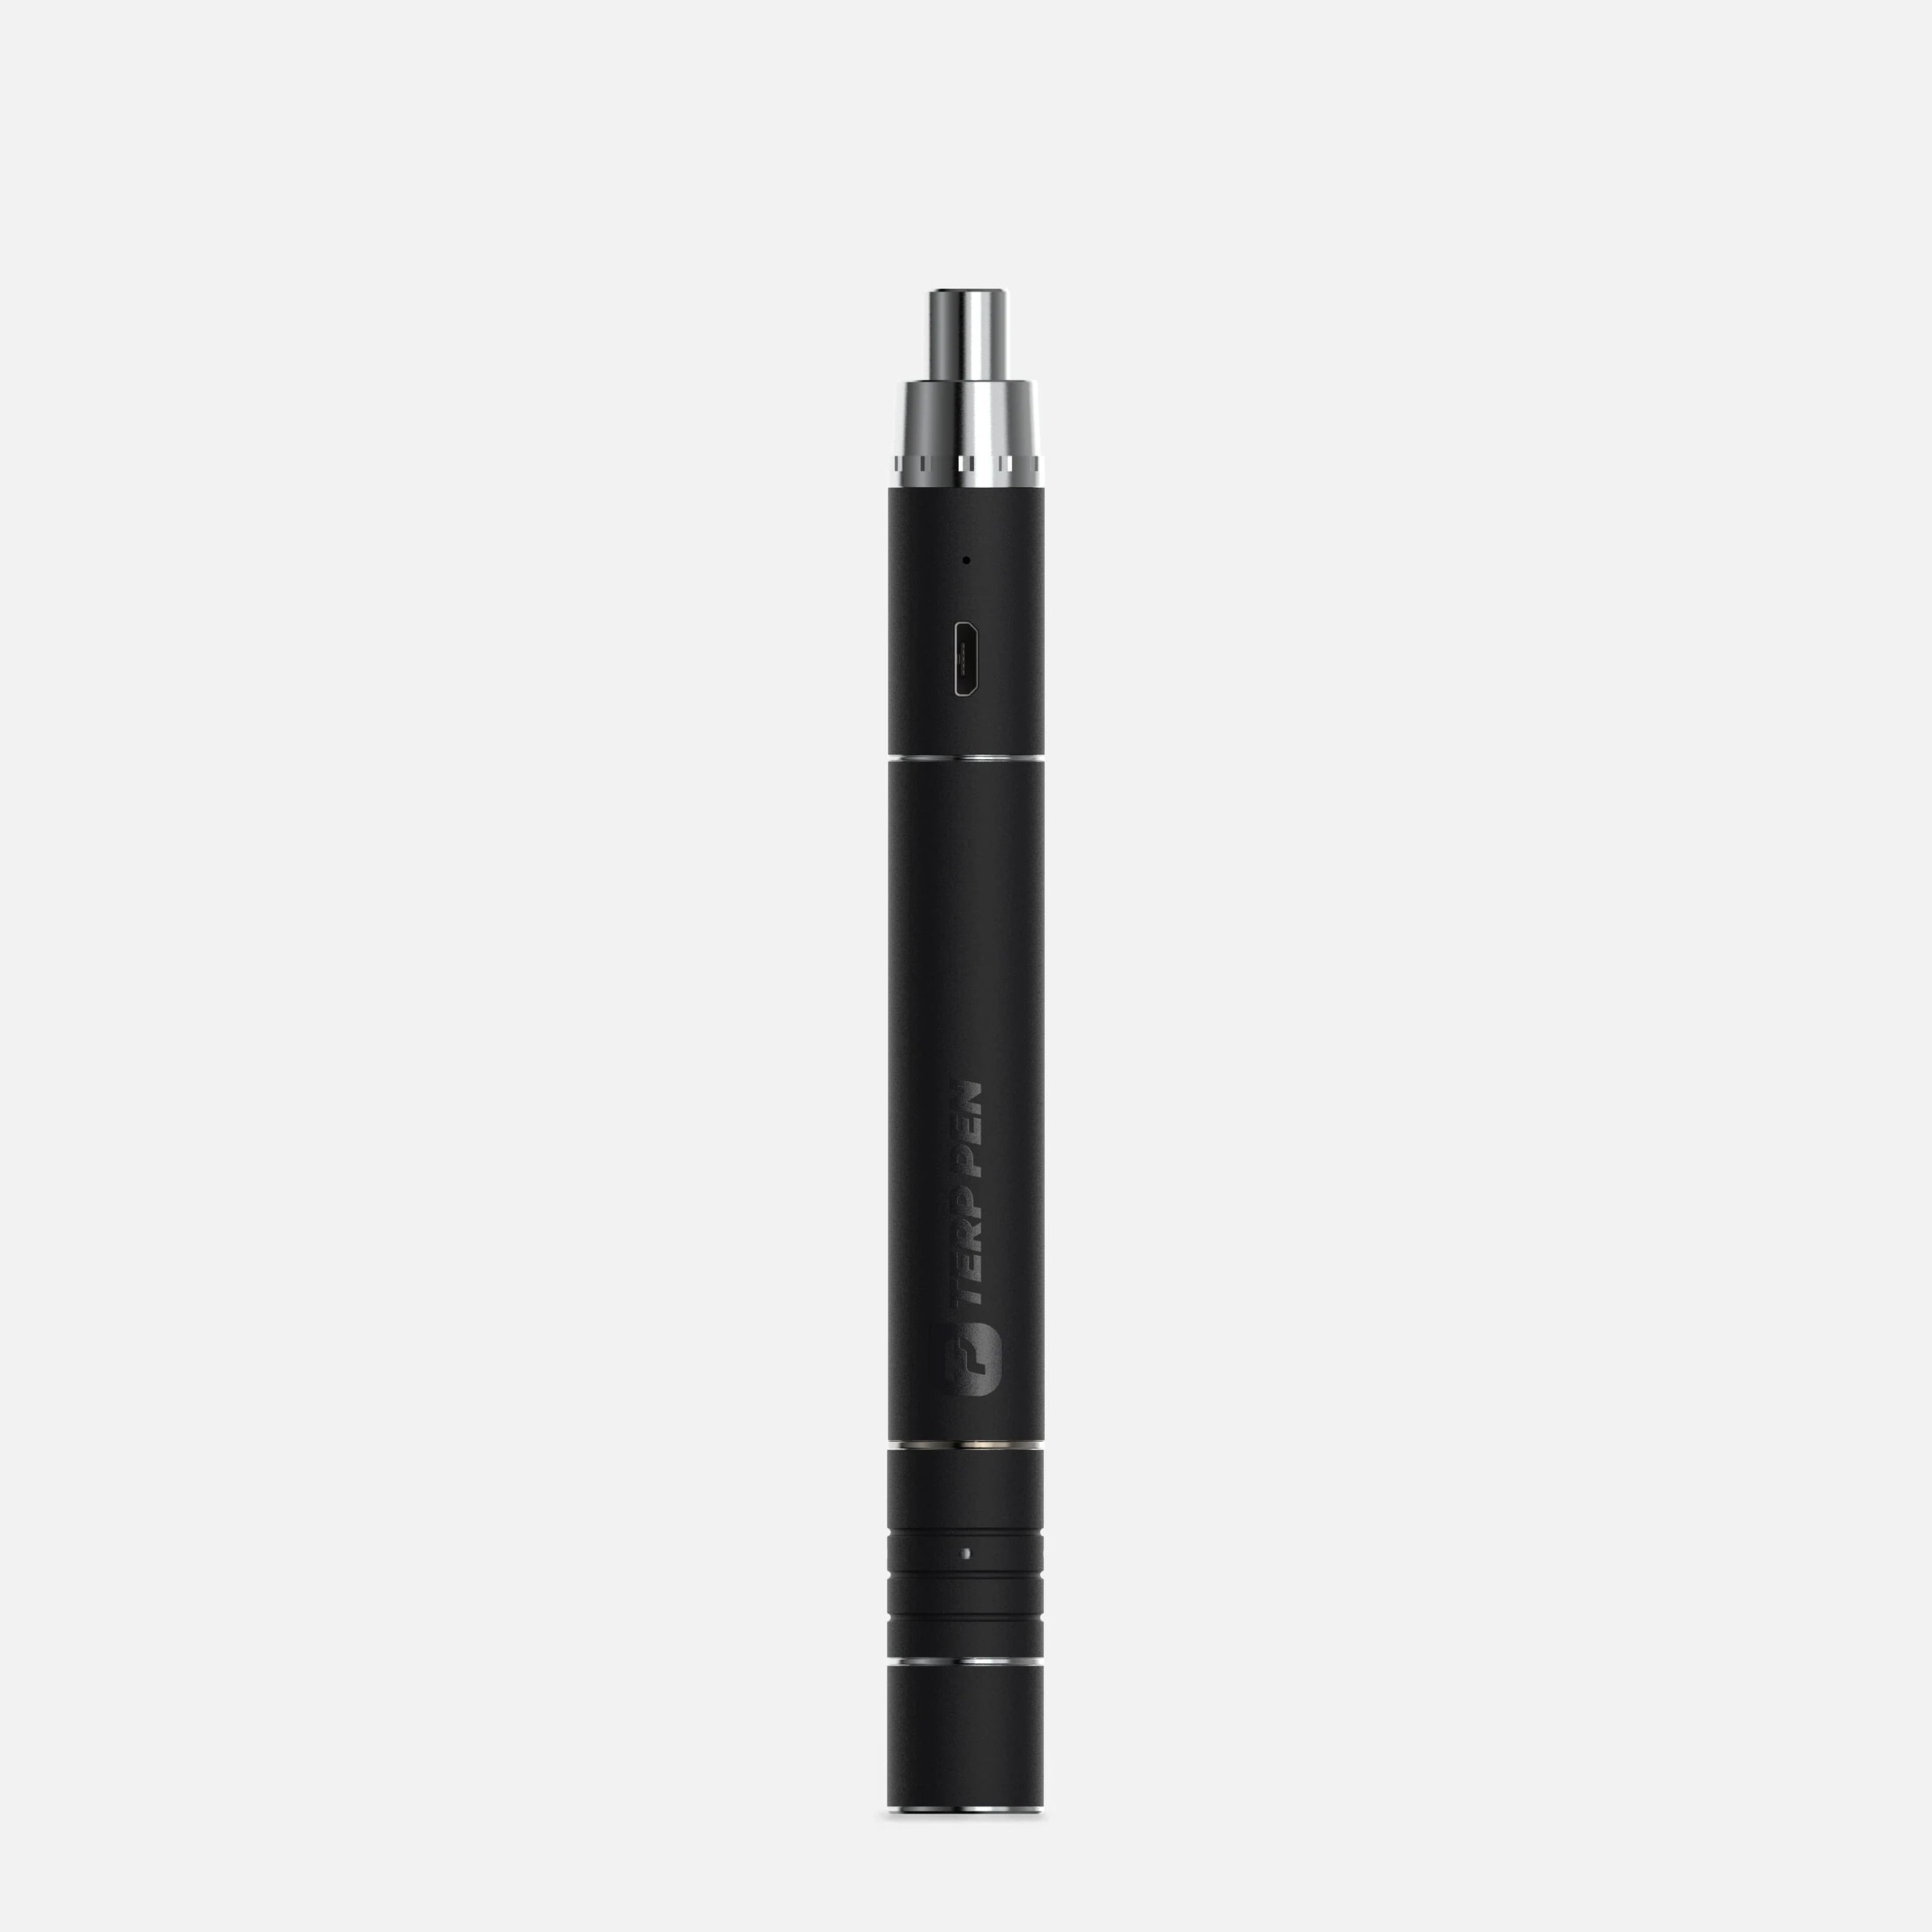 Boundless - Terp Pen XL Vaporizer - Black